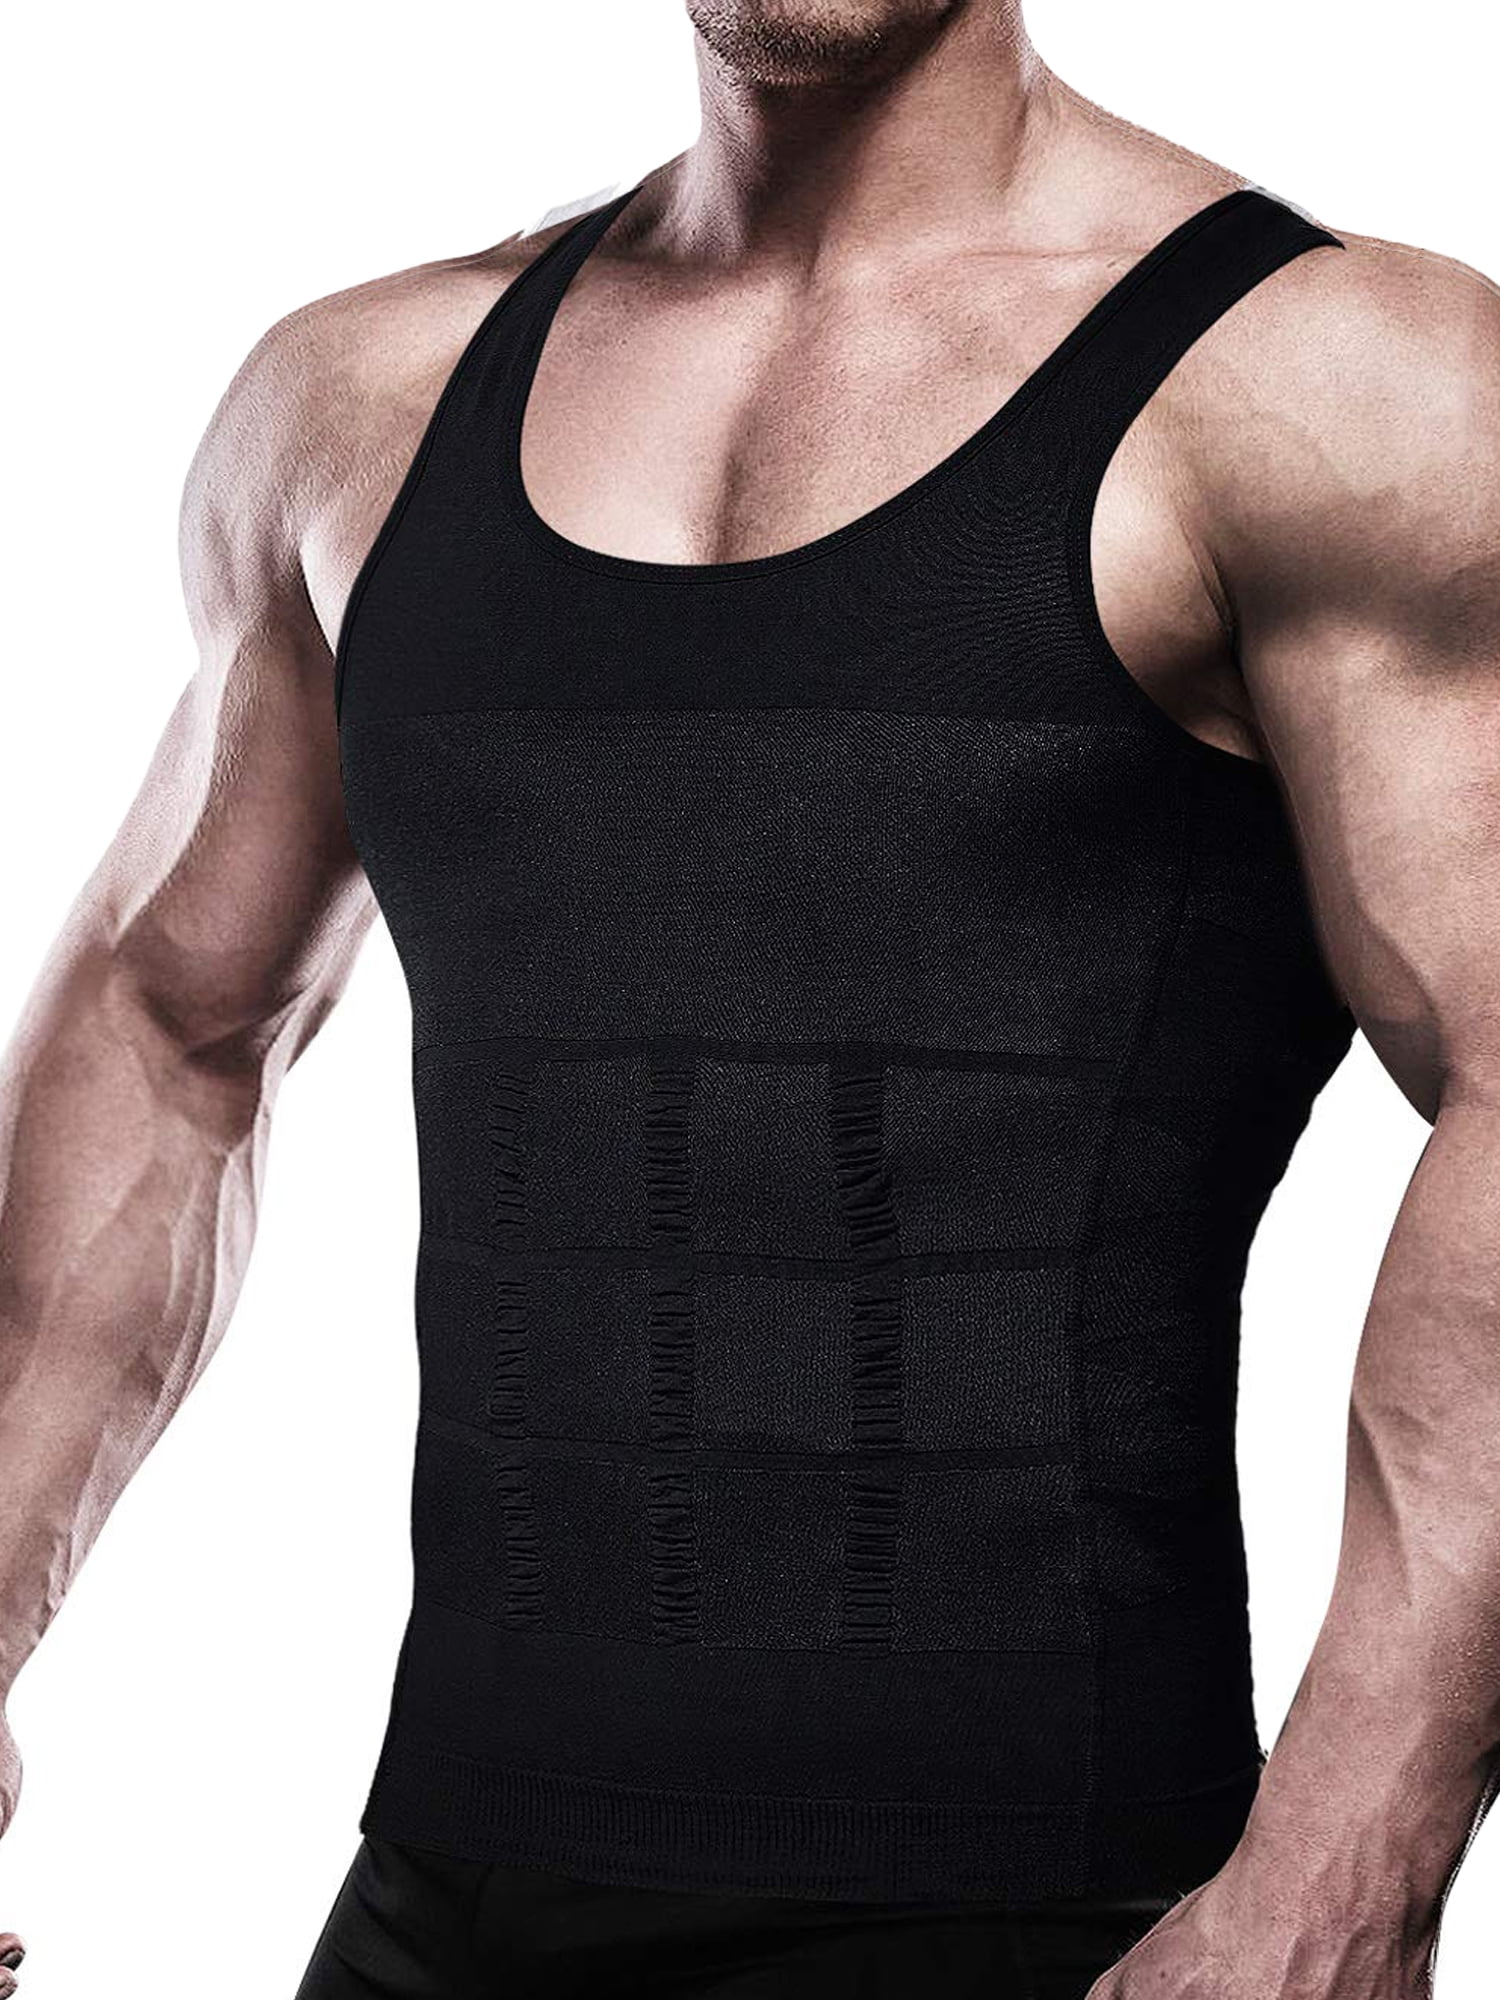 Men's Chest Compression Shirt Slimming Abs Abdomen Body Shaper Undershirt  to Hide Gynecomastia 